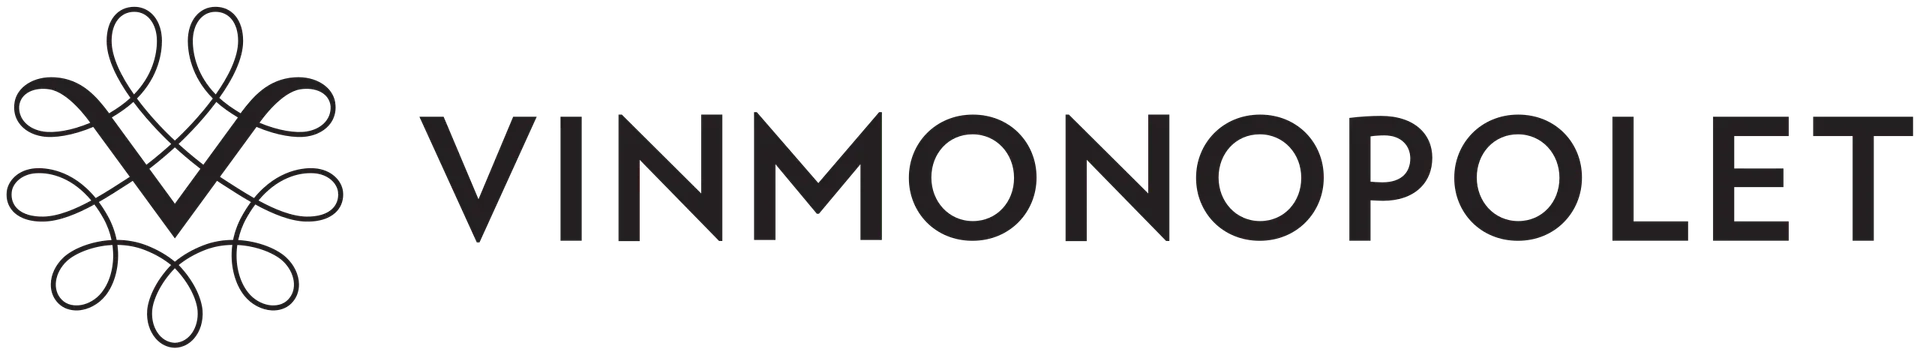 VINMONOPOLET logo